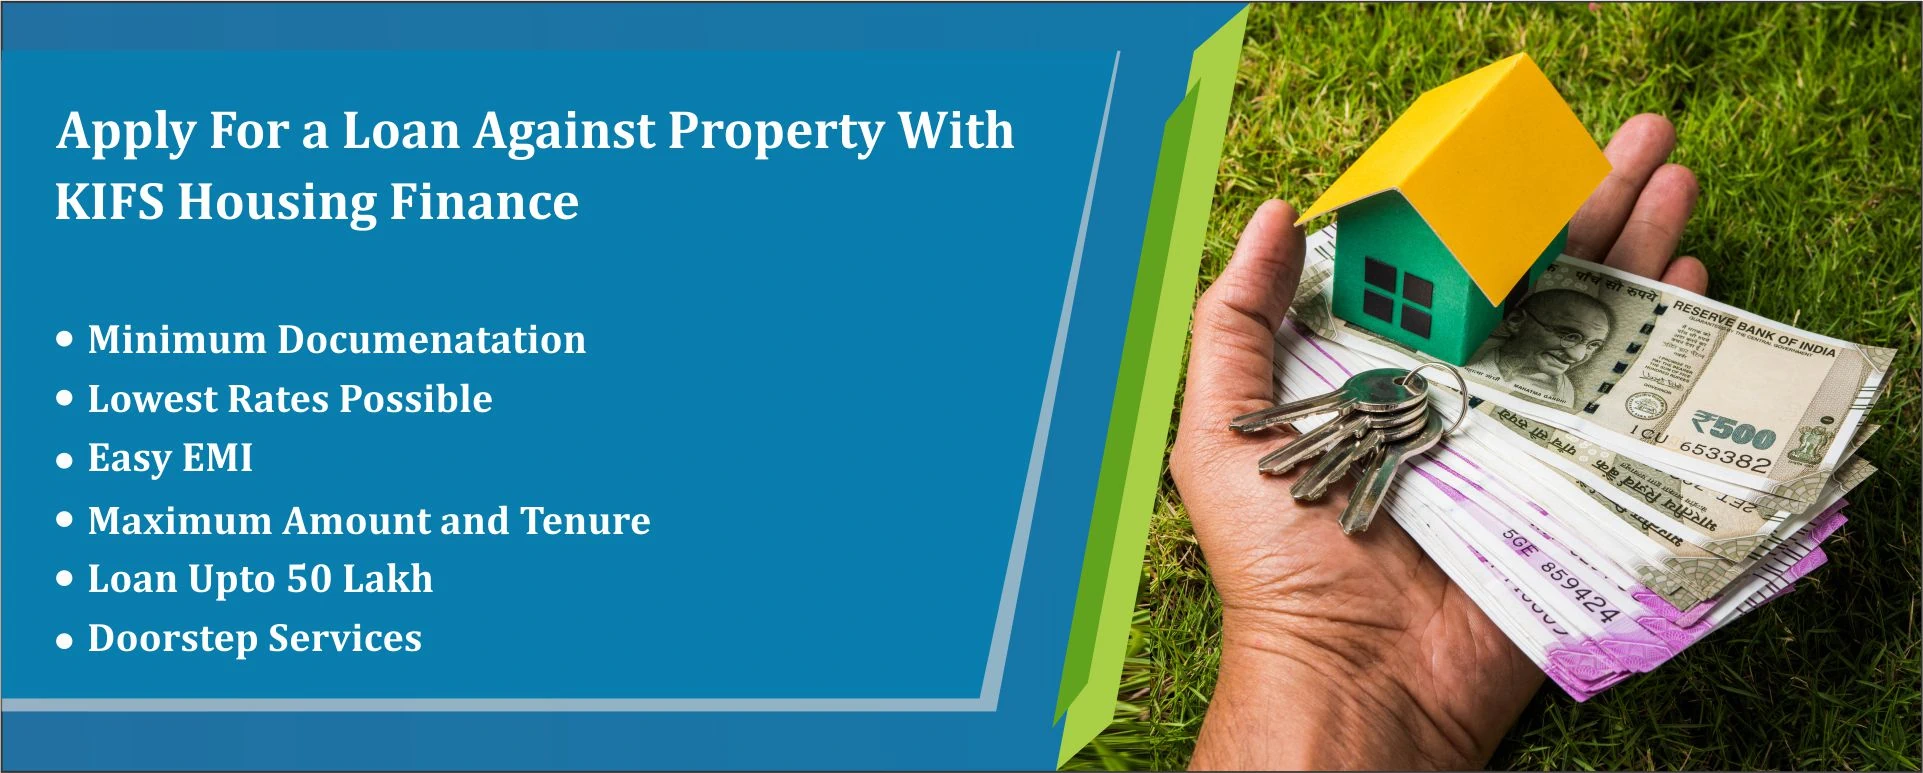 Loan against Property